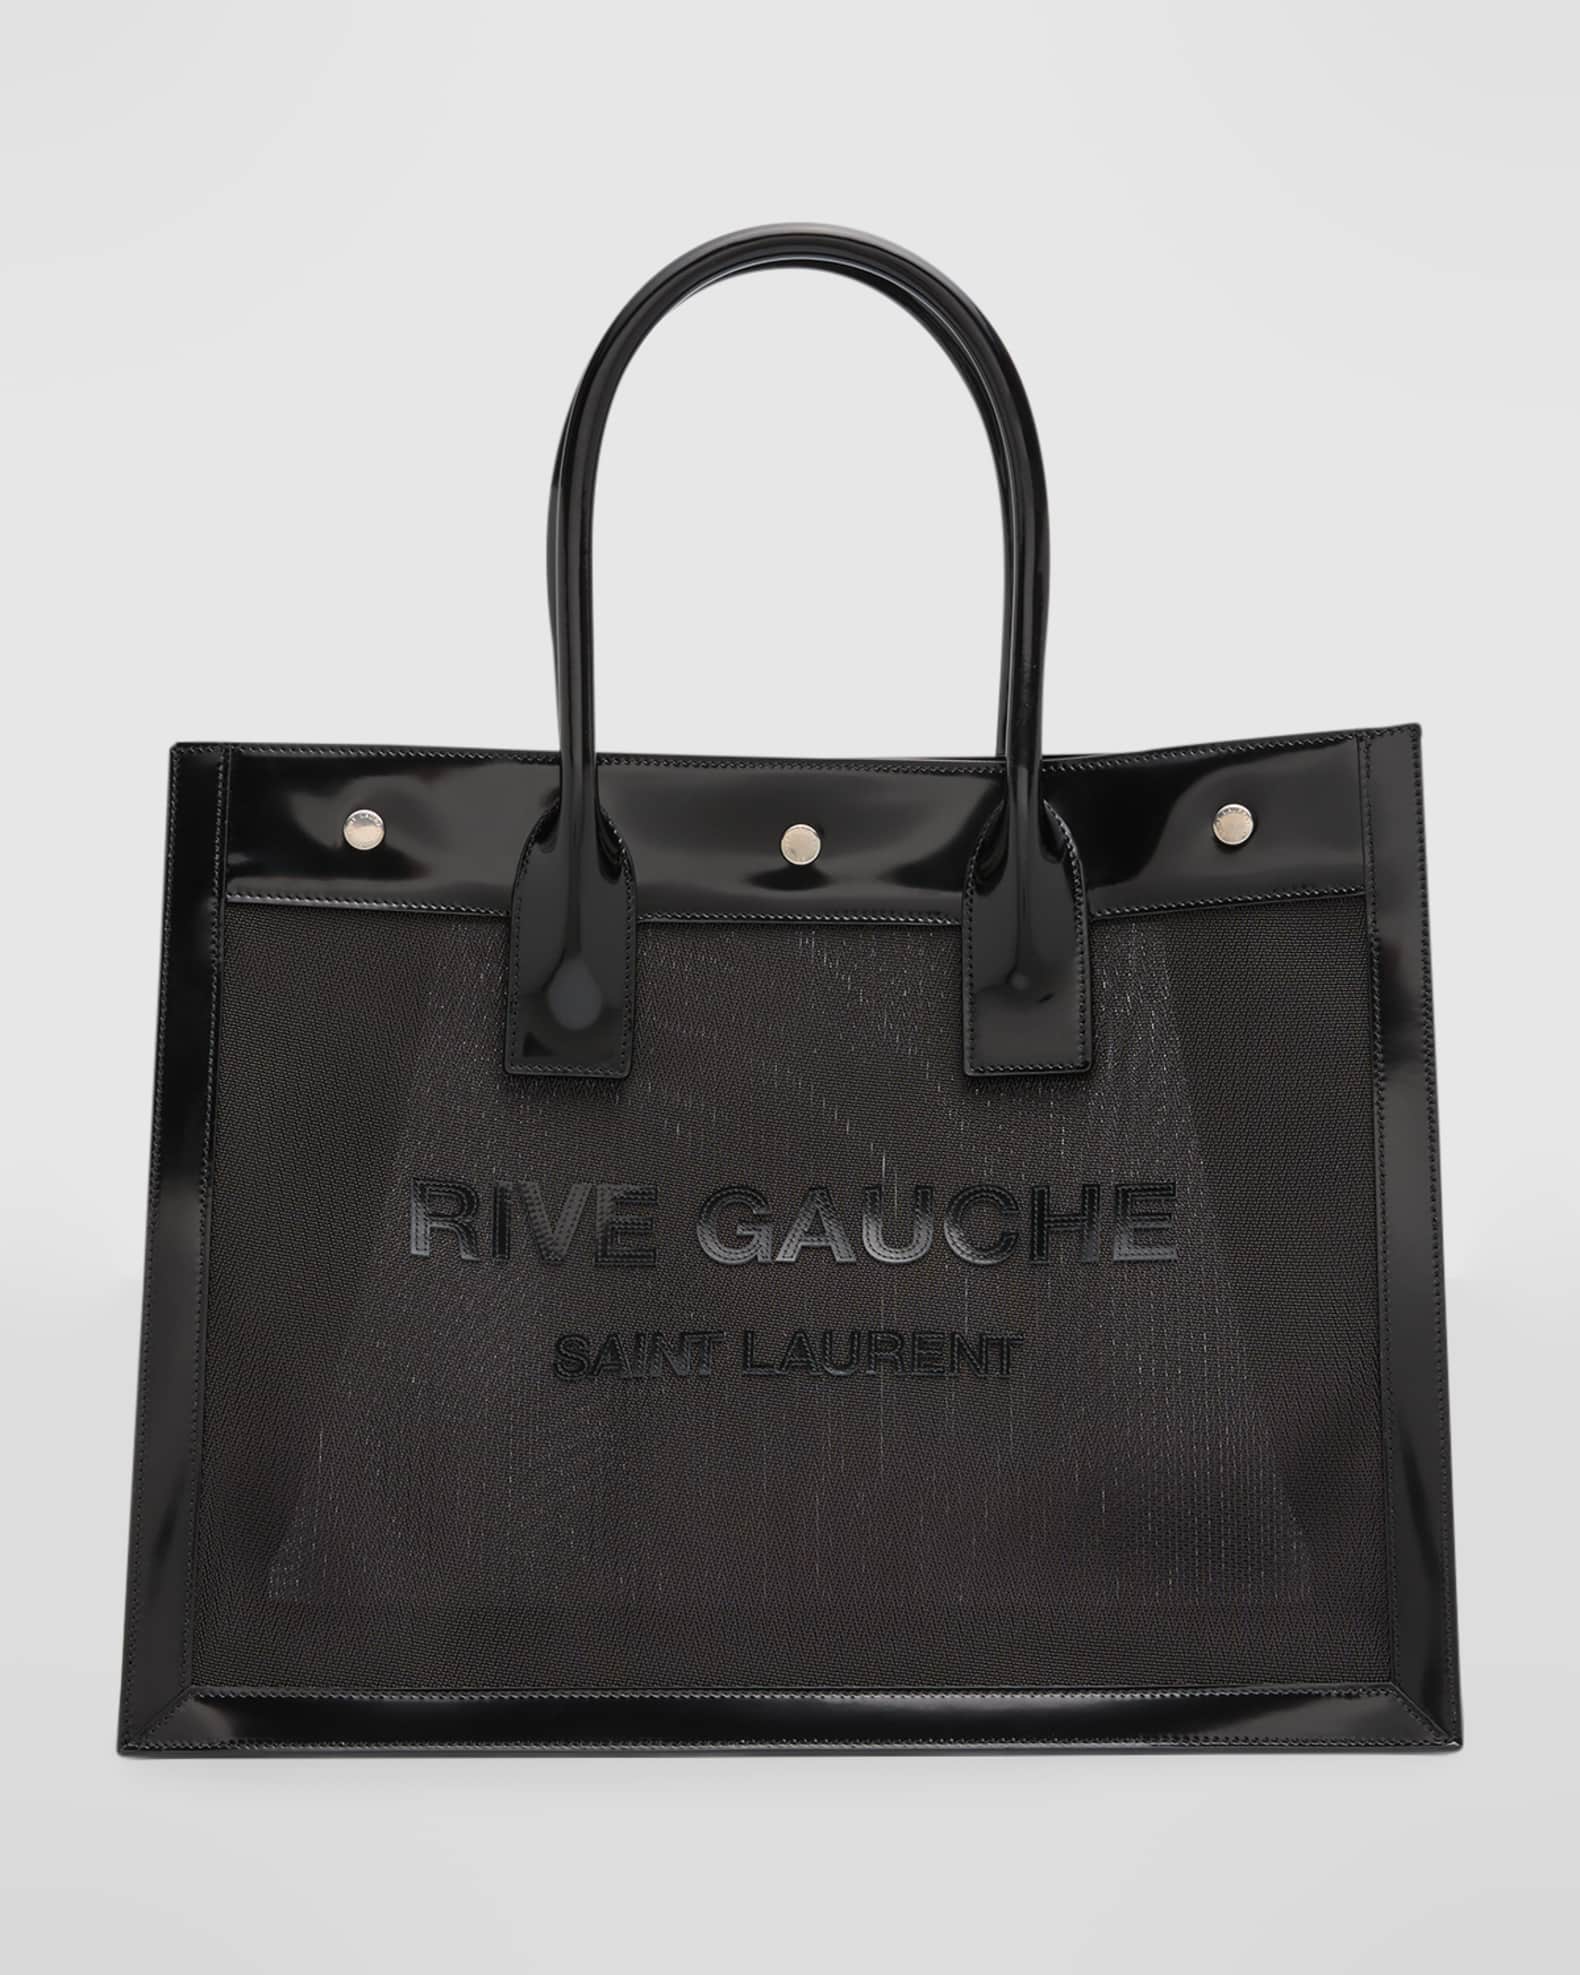 Saint Laurent Rive Gauche Small Tote Bag in Mesh | Neiman Marcus